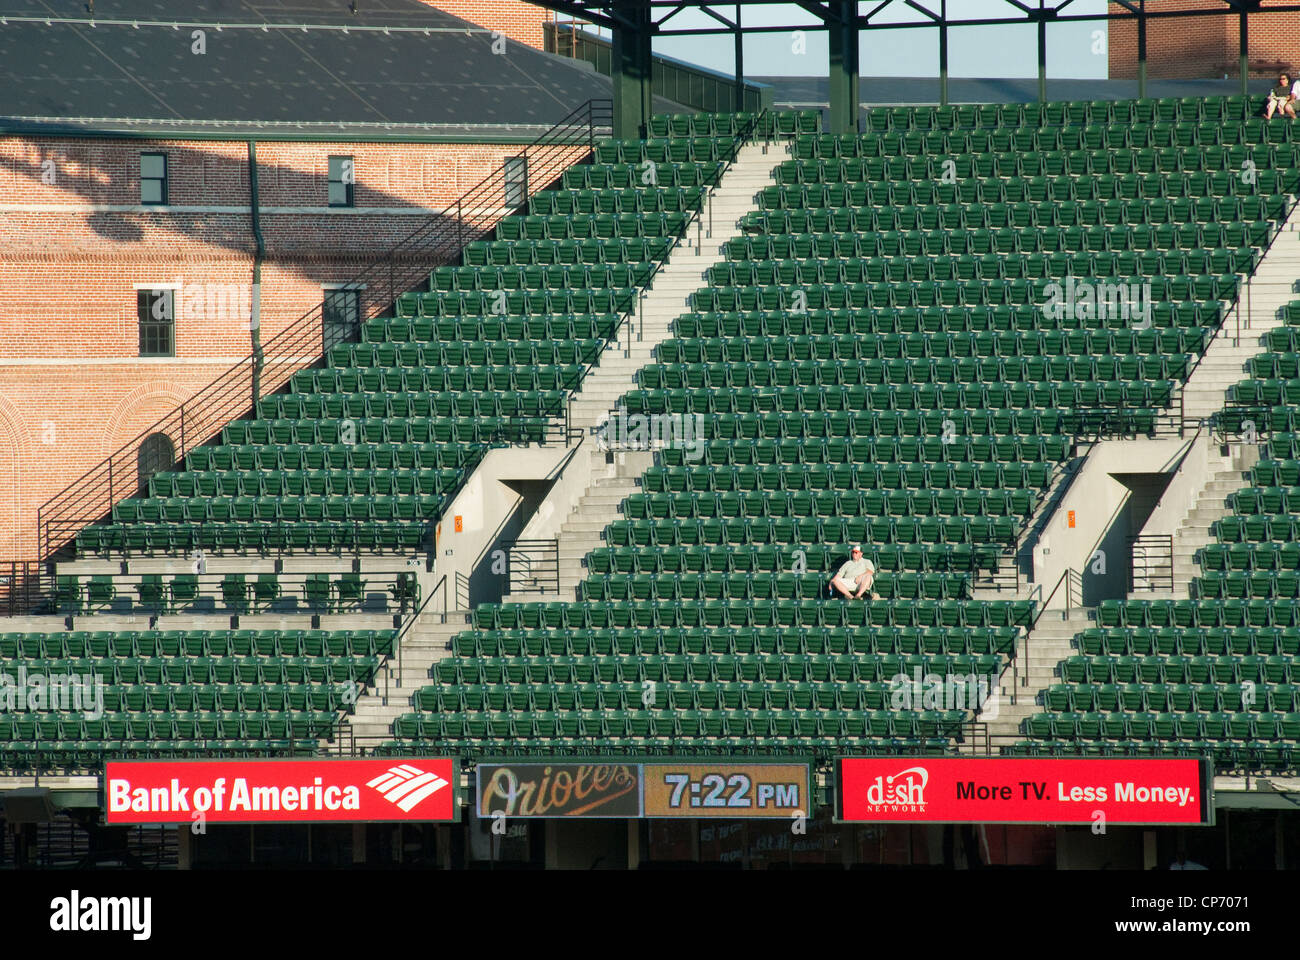 Baseball stadium seats hi-res stock photography and images - Alamy